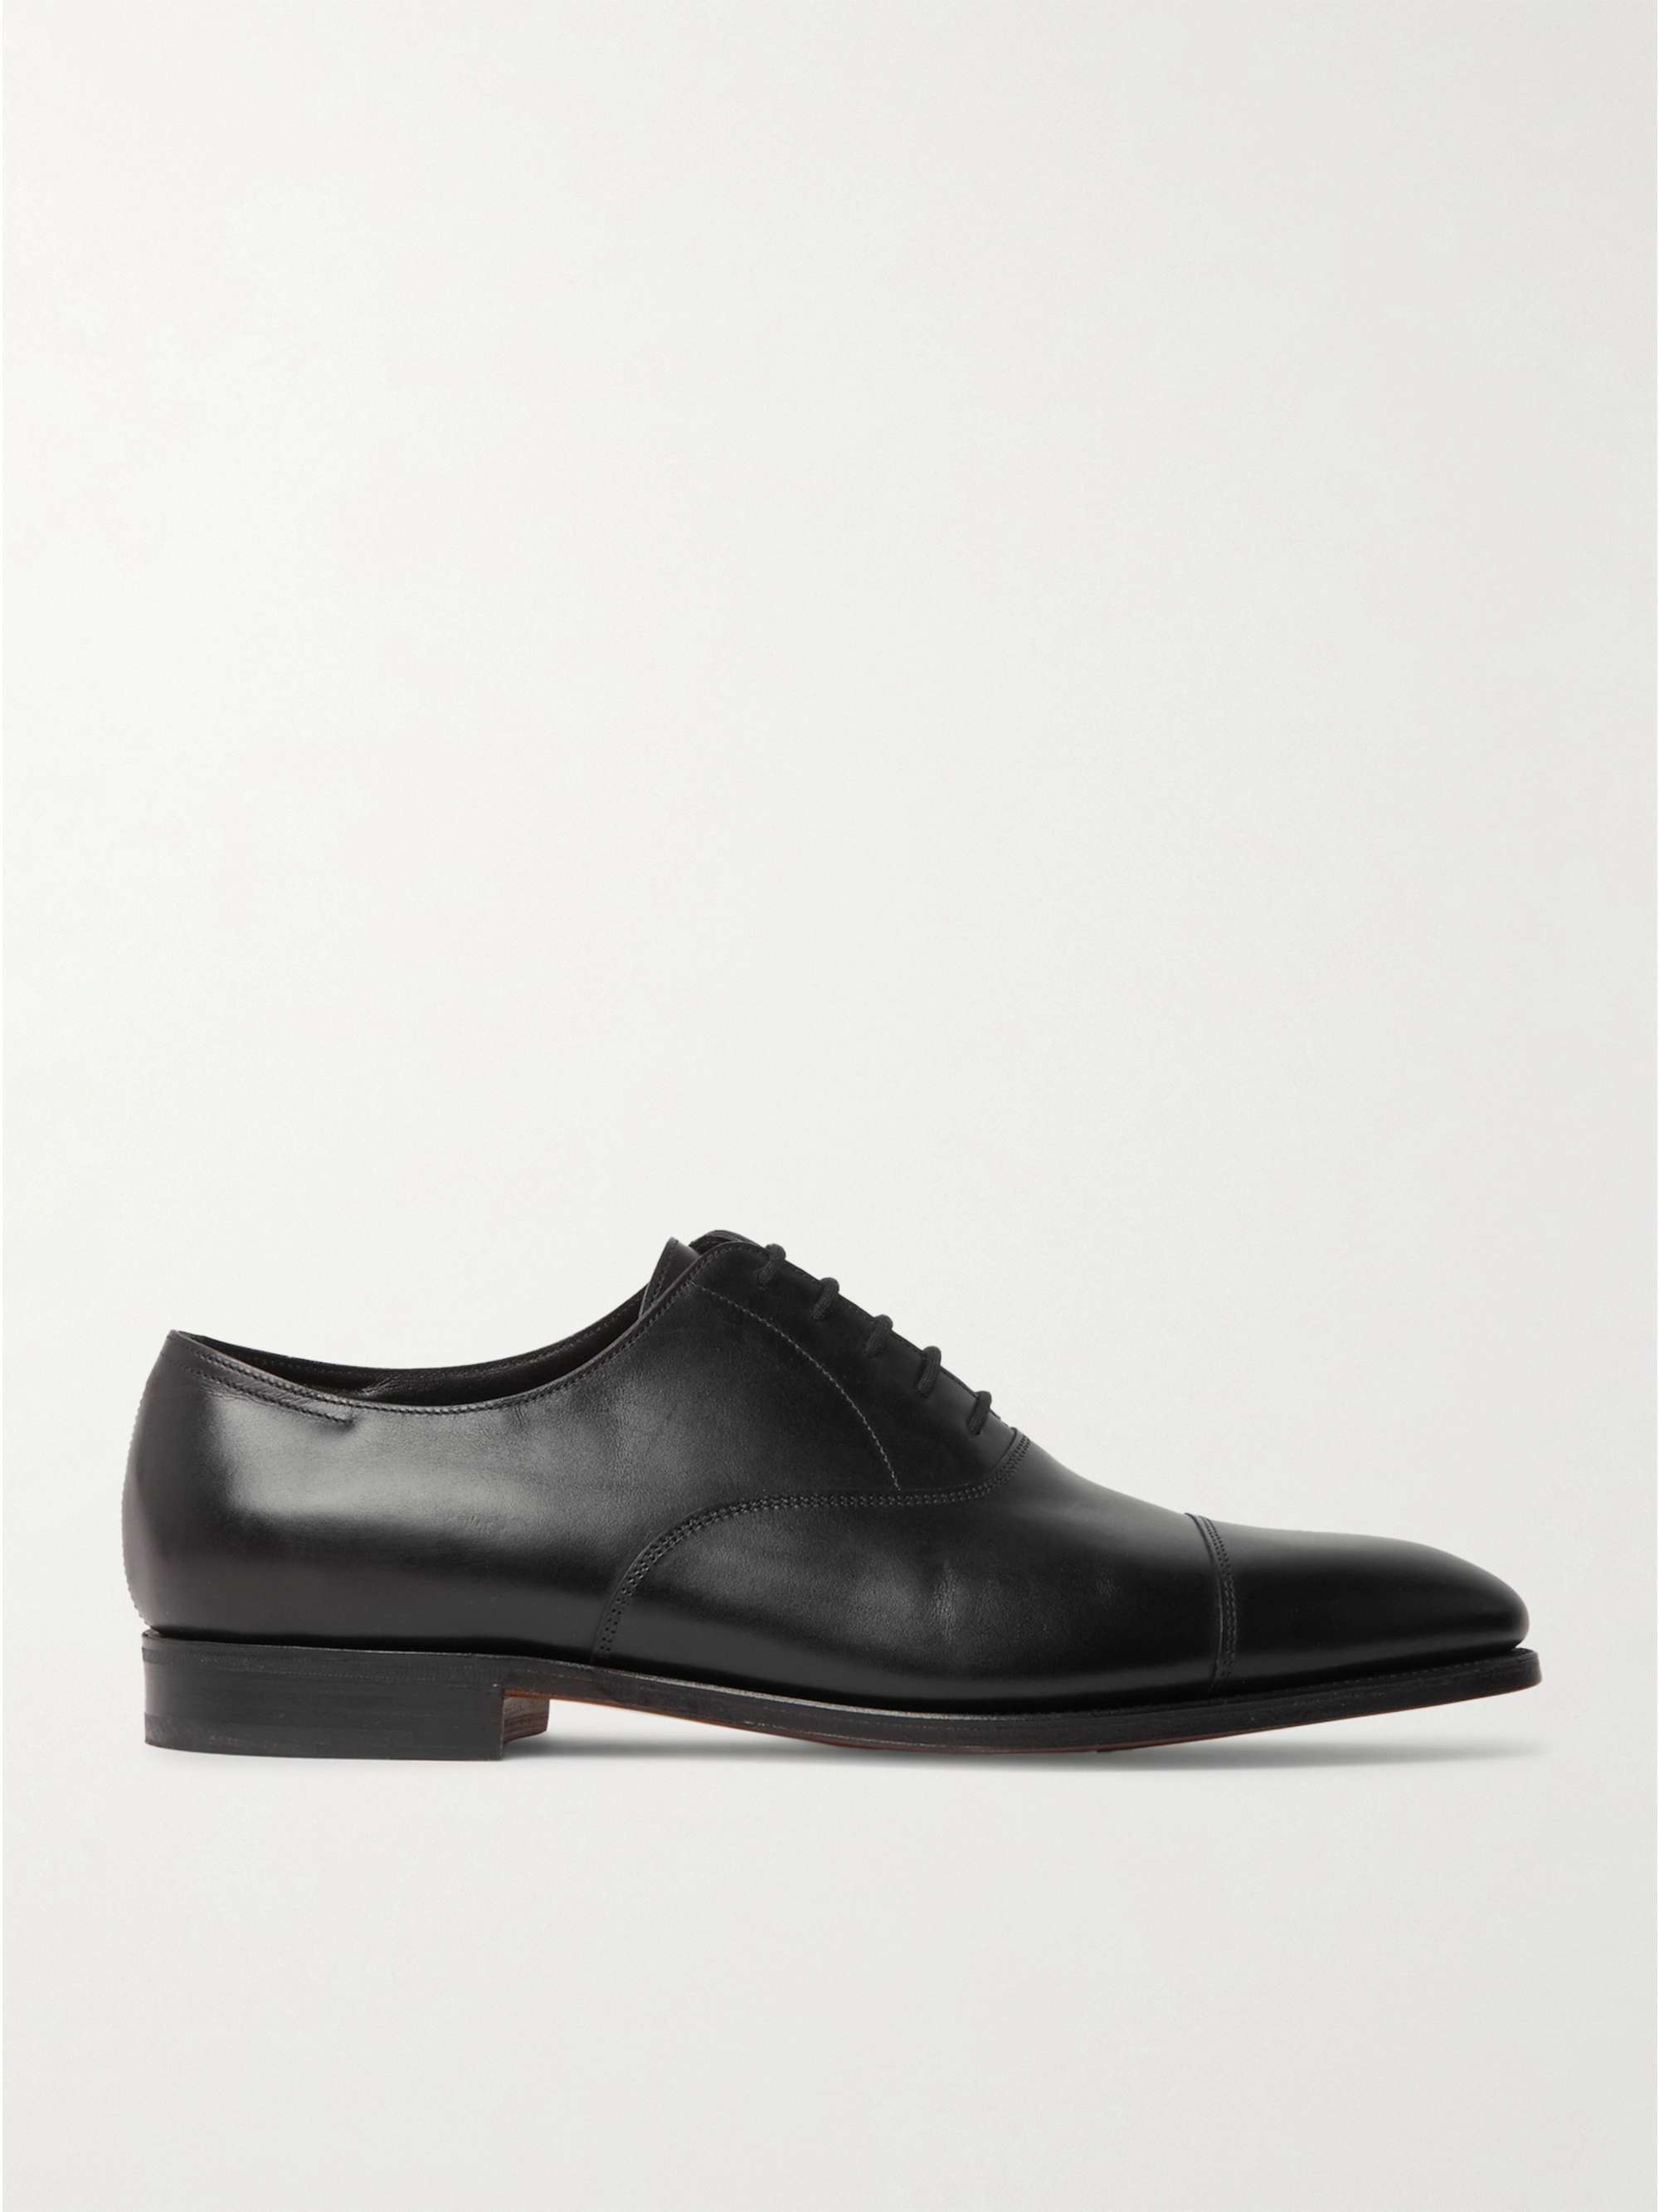 JOHN LOBB City II Leather Oxford Shoes | MR PORTER